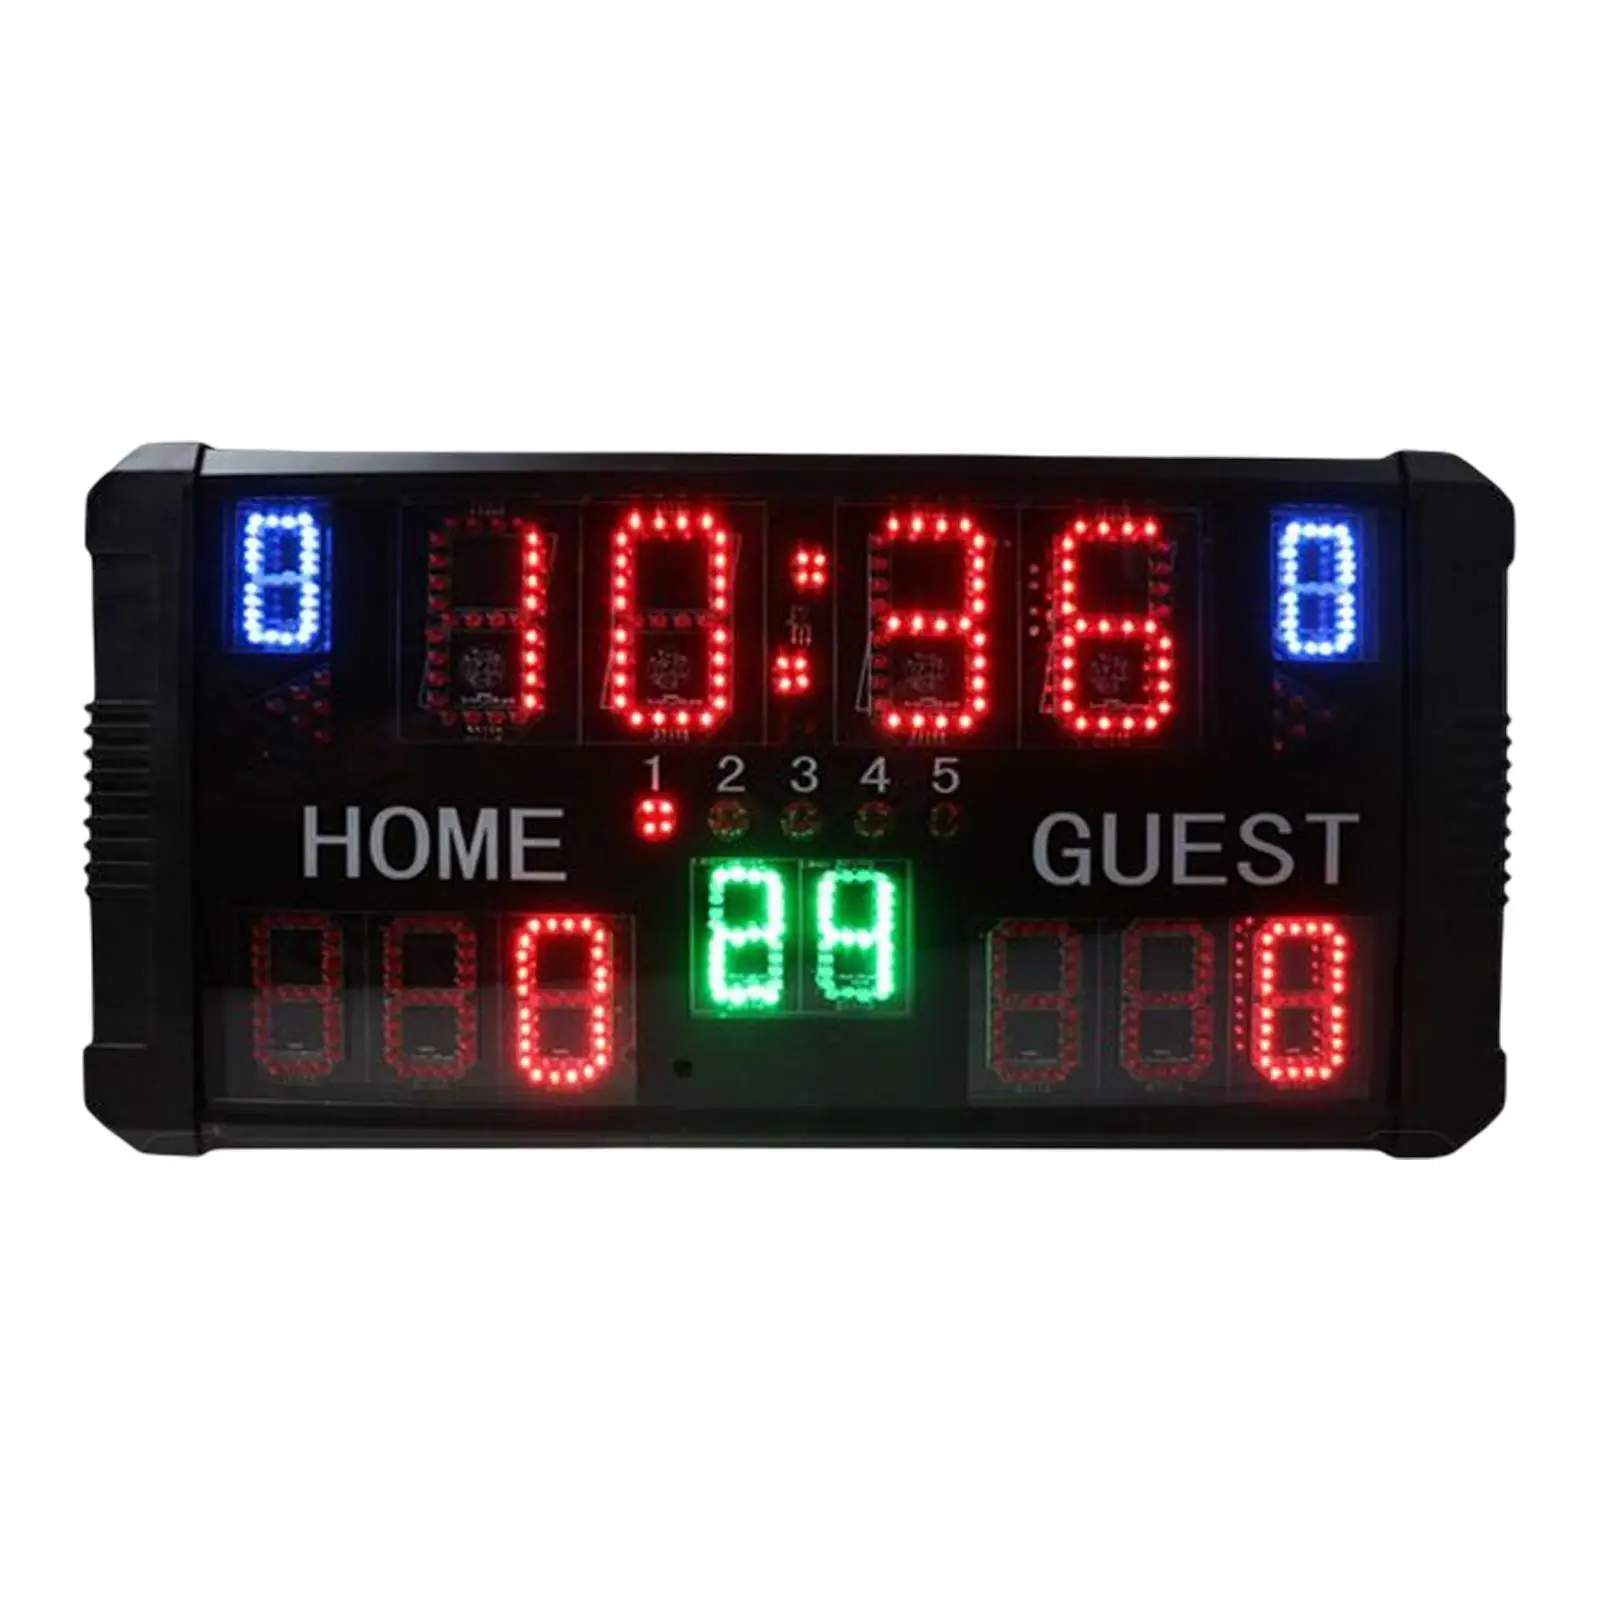 Portable Electronic Digital Scoreboard Remote Control Indoor Basketball Scoreboard Score Keeper Score Clock for Sports Tabletop